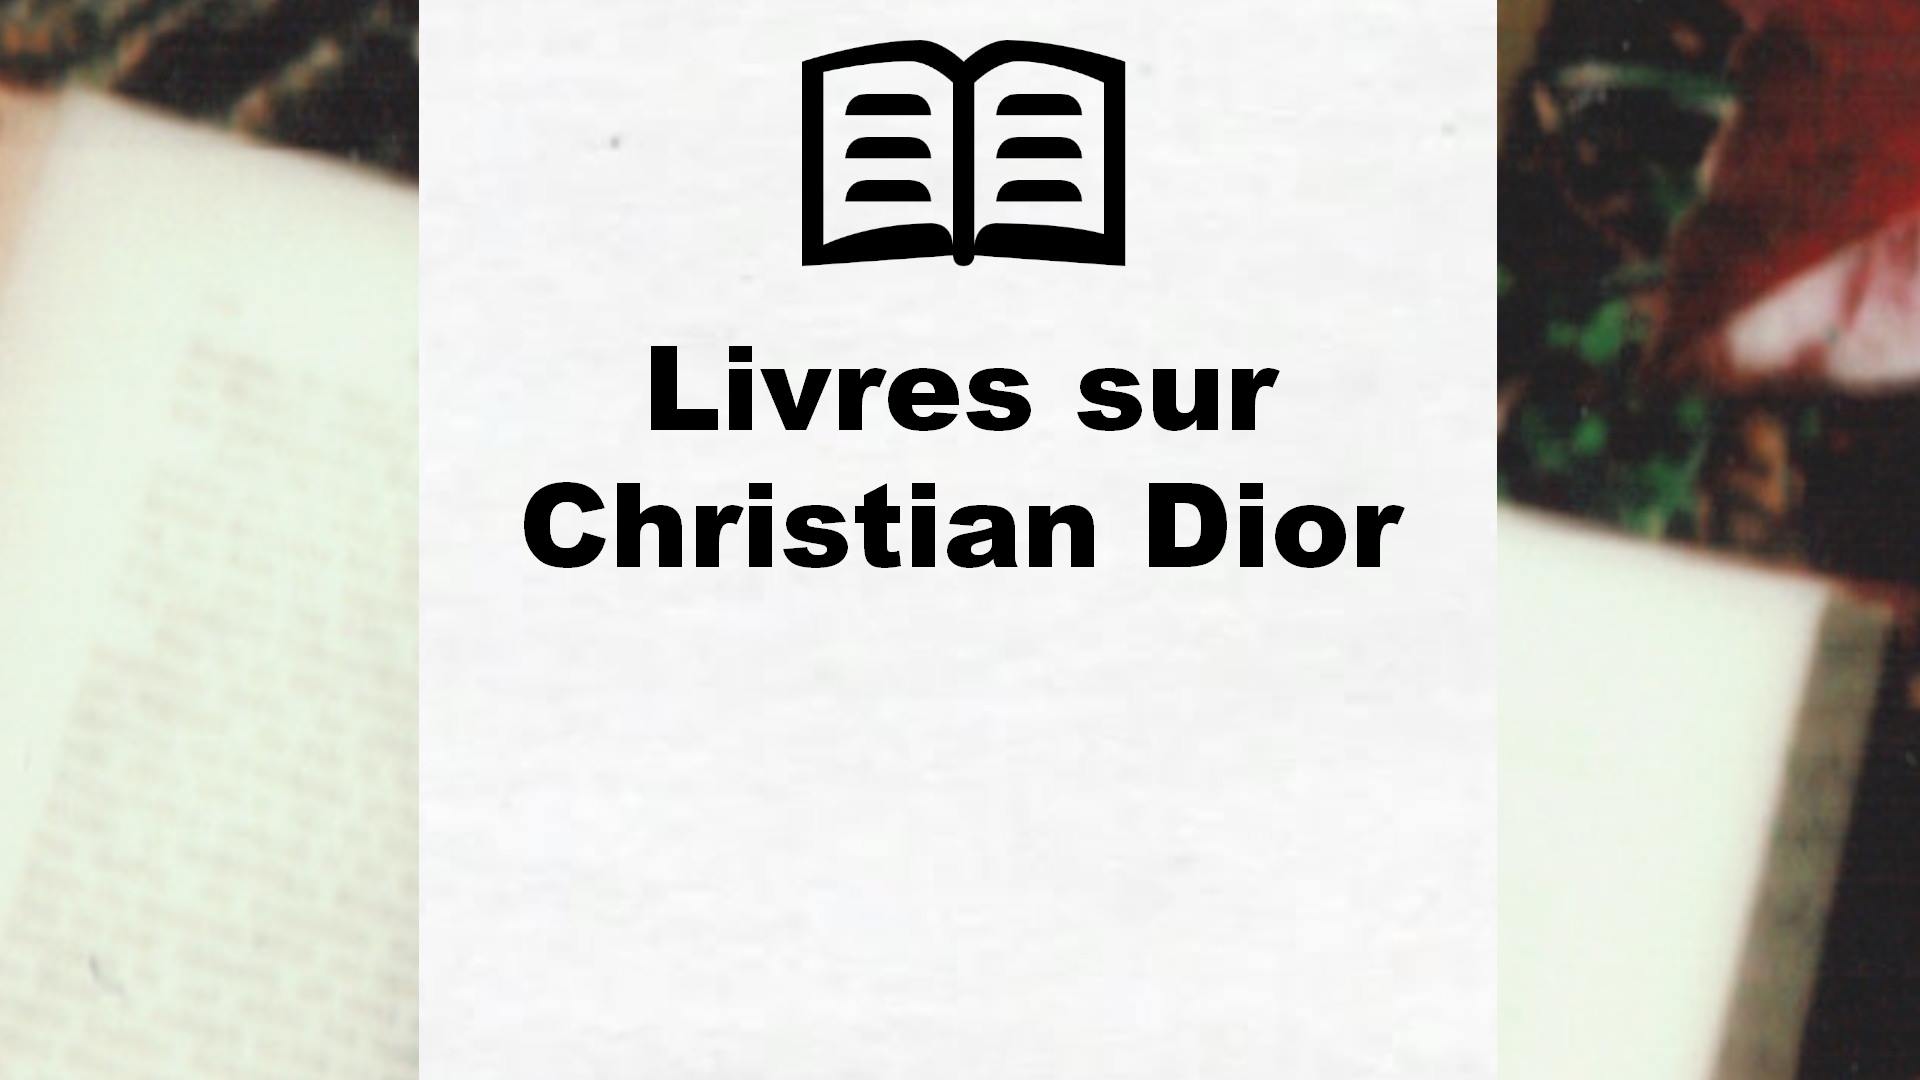 Livres sur Christian Dior